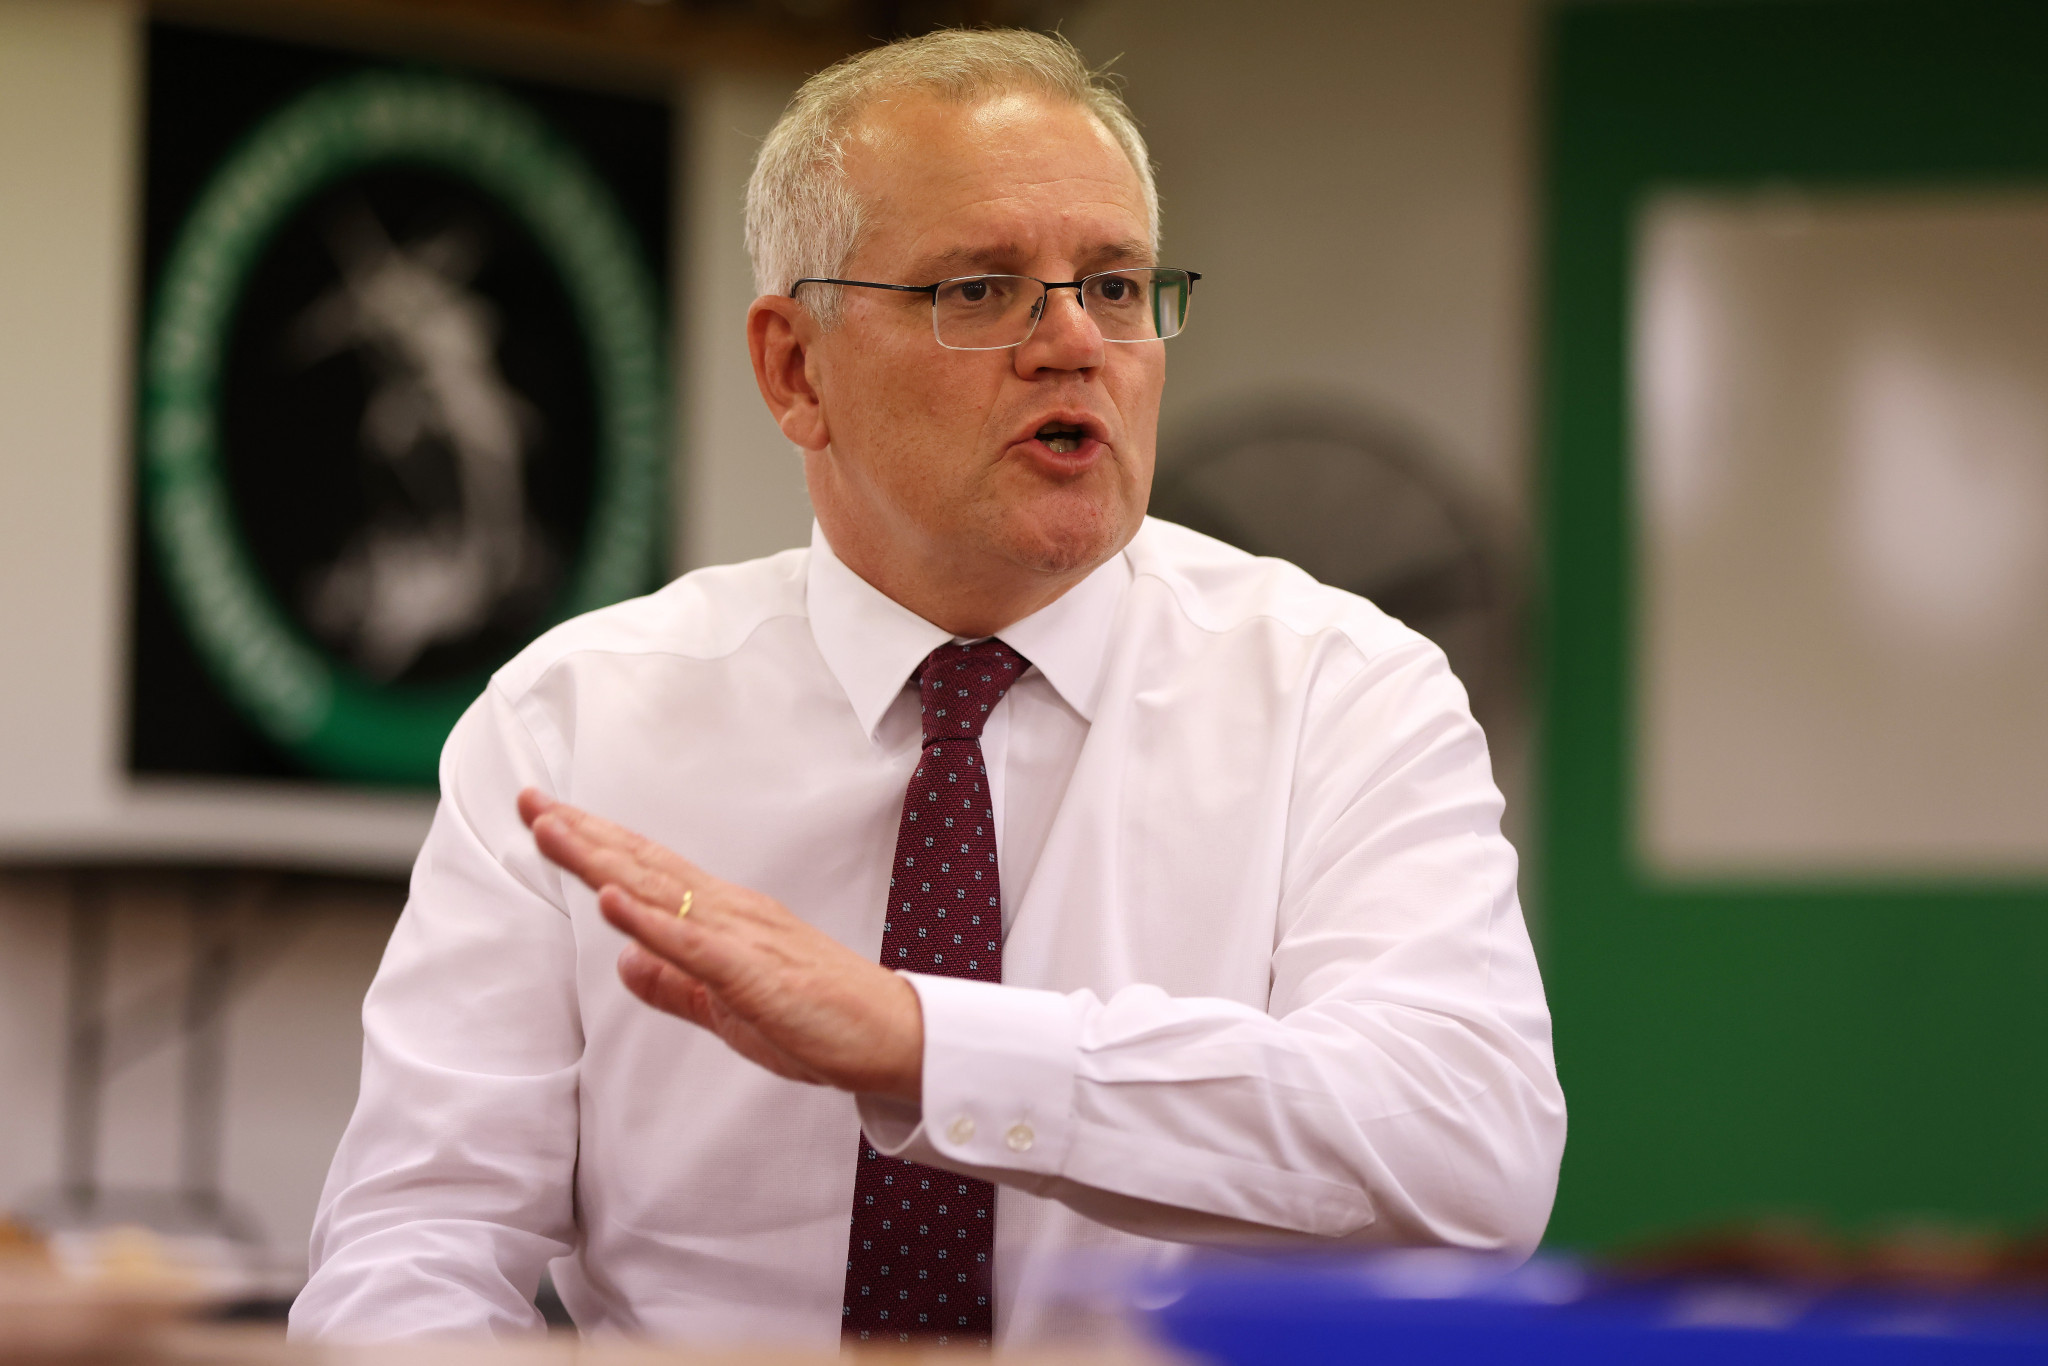 Former Prime Minister Scott Morrison said the Australian Government would go 